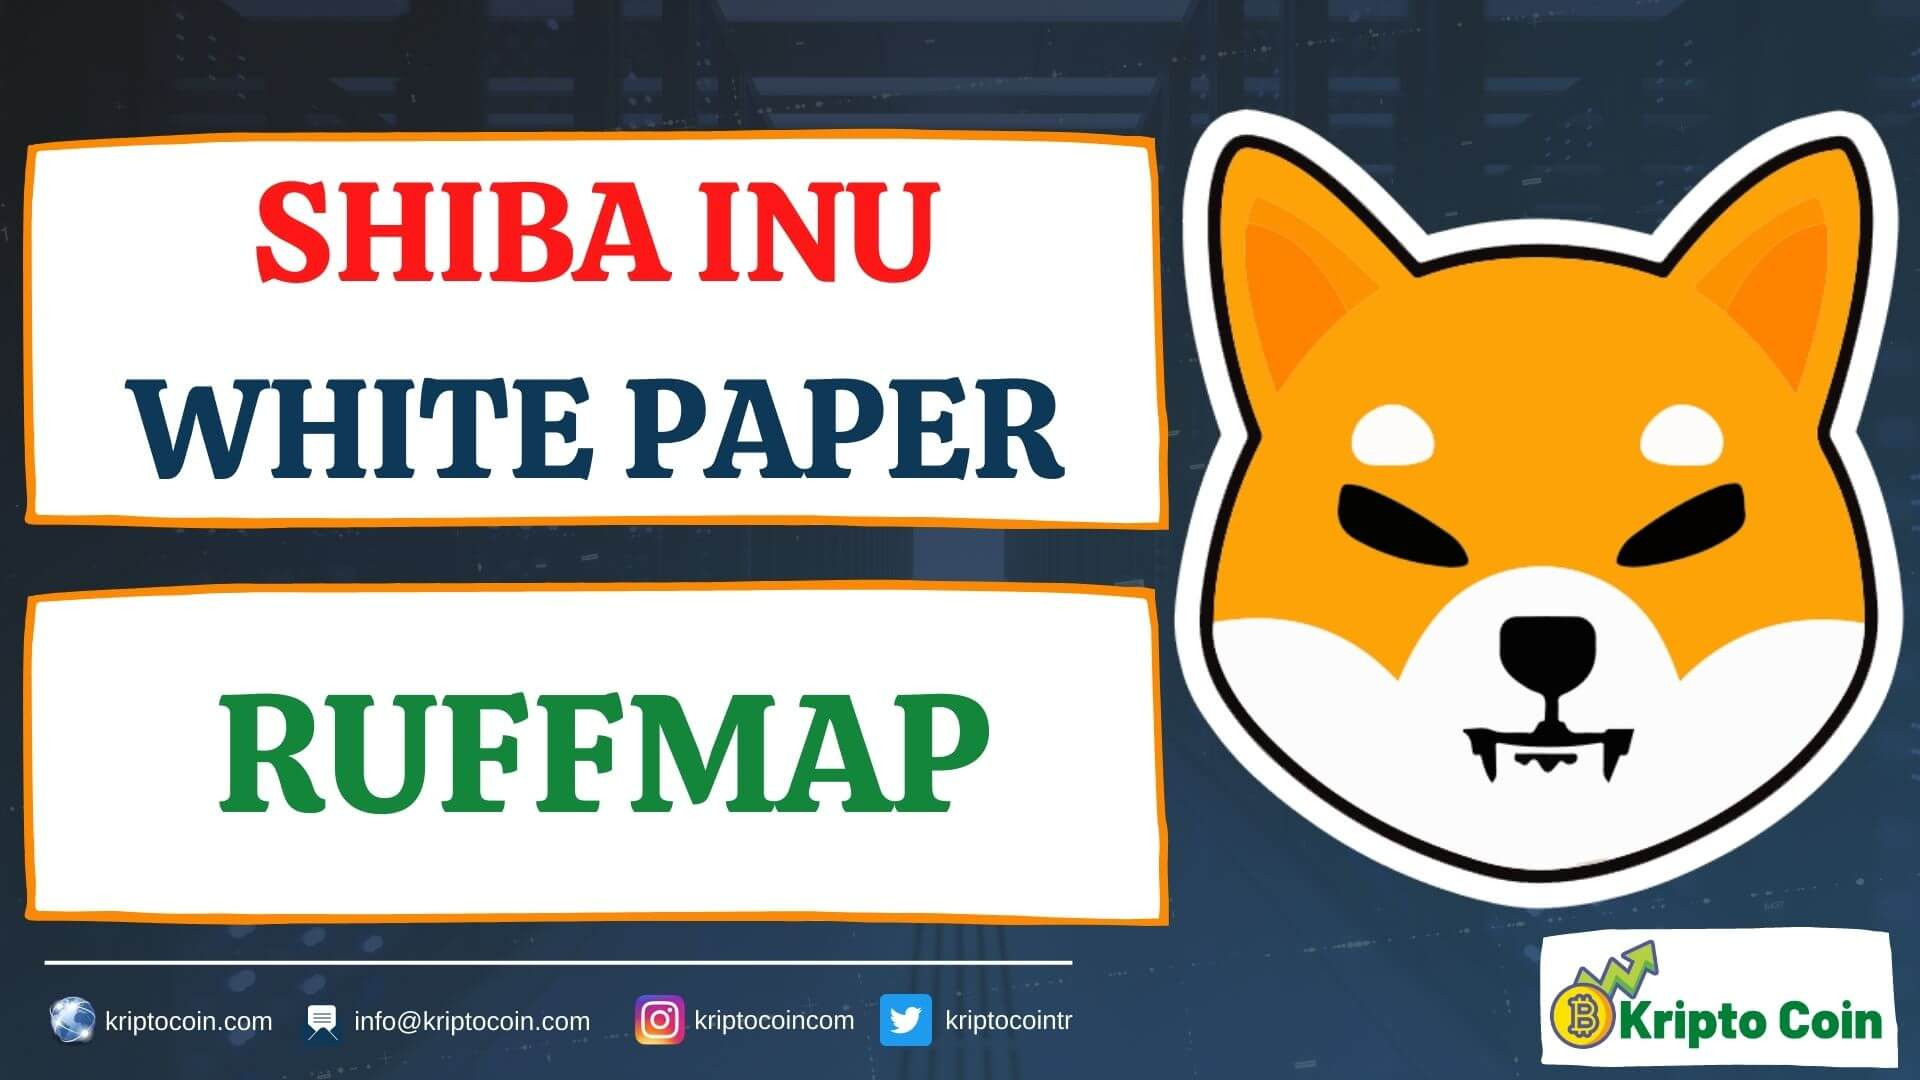 SHIBA INU White Paper 23 - Ruffmap